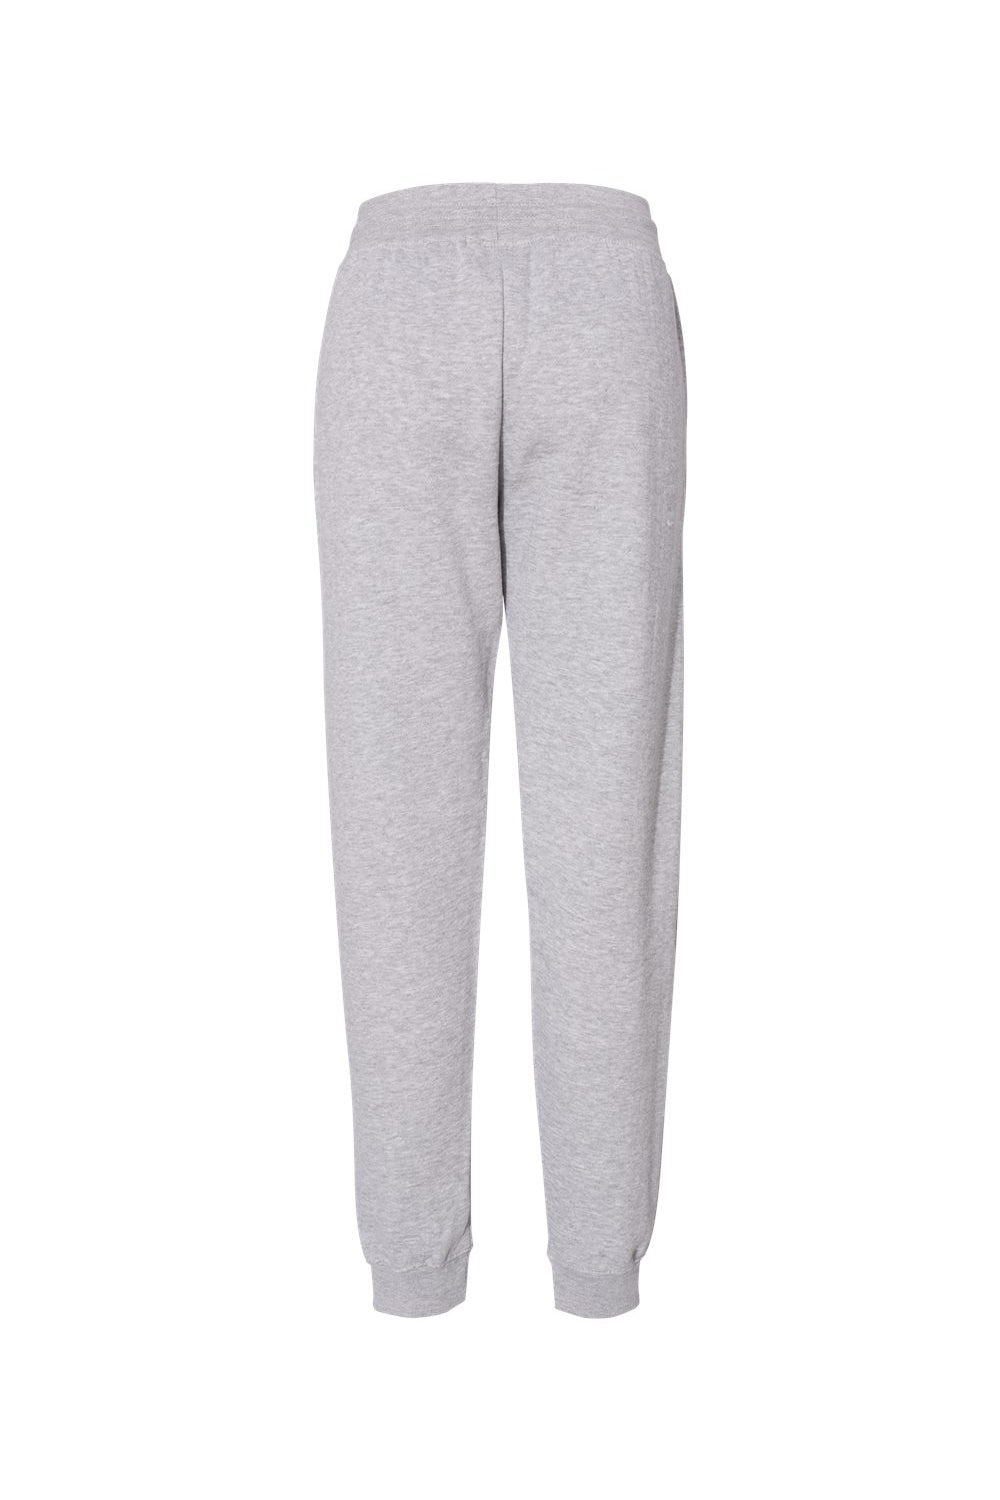 Badger 1216 Womens Athletic Fleece Jogger Sweatpants w/ Pockets Oxford Grey Flat Back